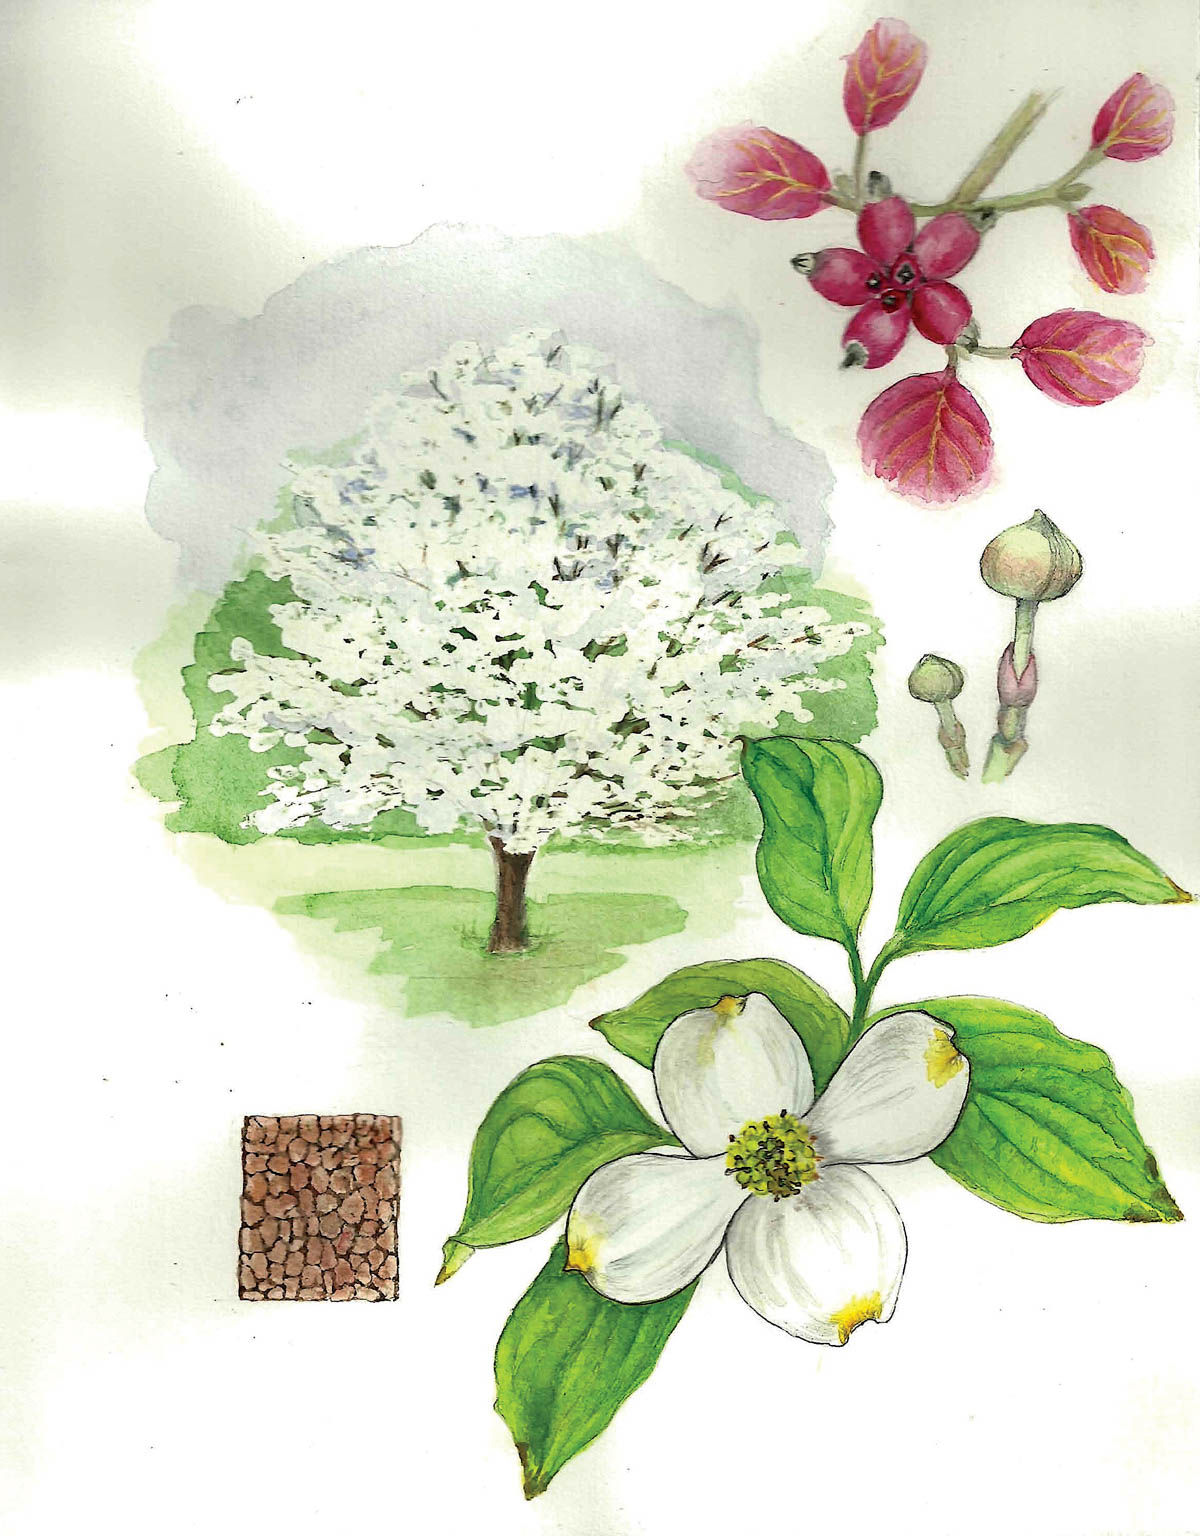 in bloom: flowering dogwood - the laurel of asheville